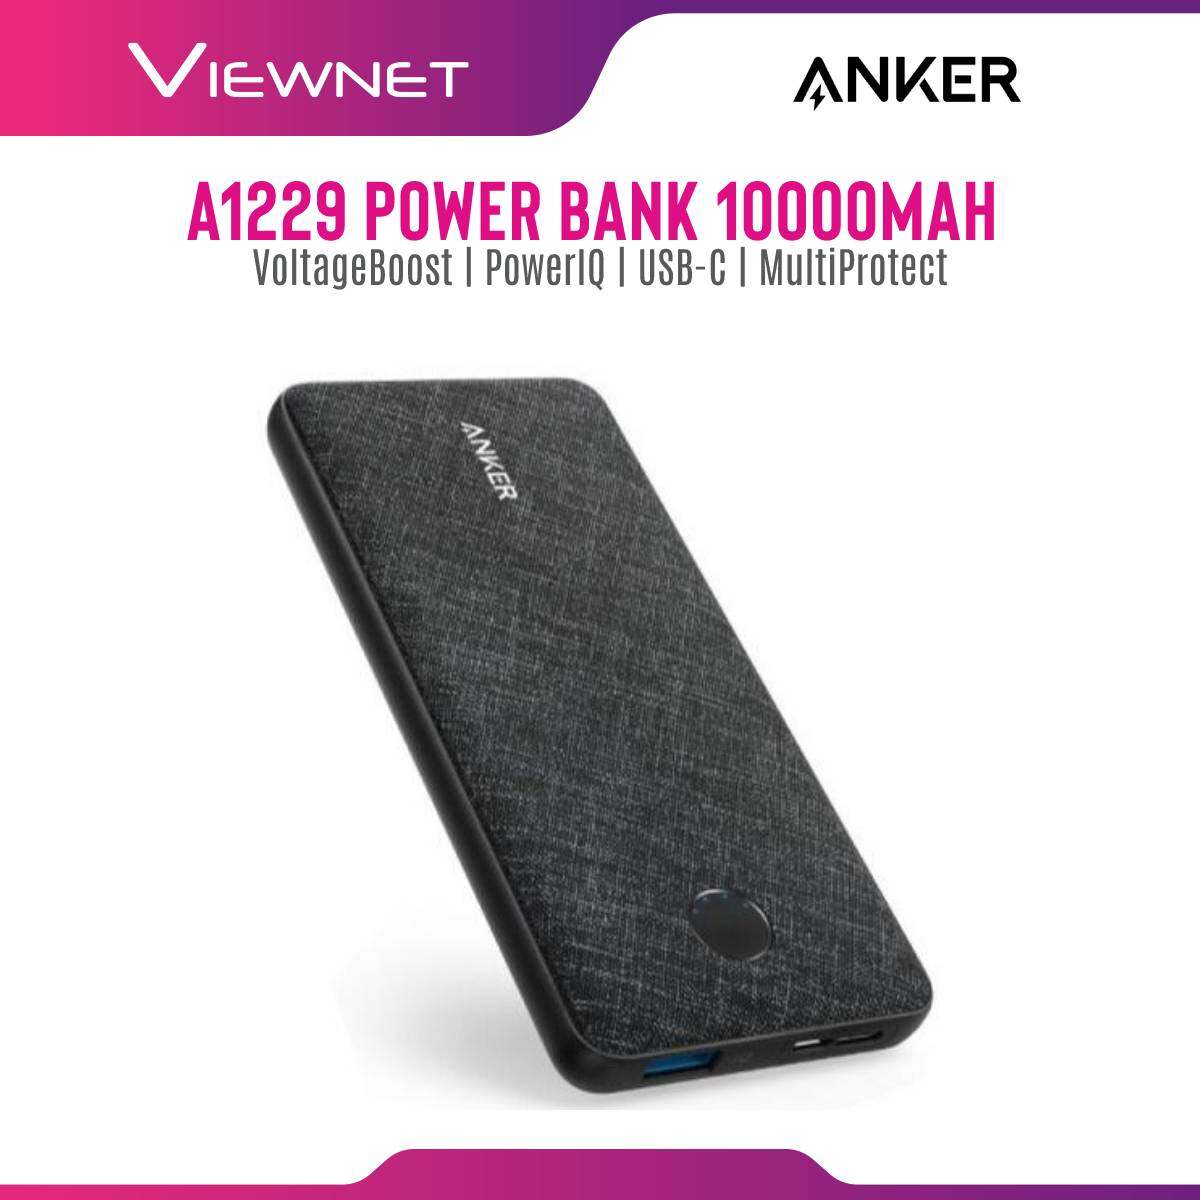 Anker A1229 PowerCore Metro Slim Power Bank with Dual Input - USB C + Micro USB (10000mah)